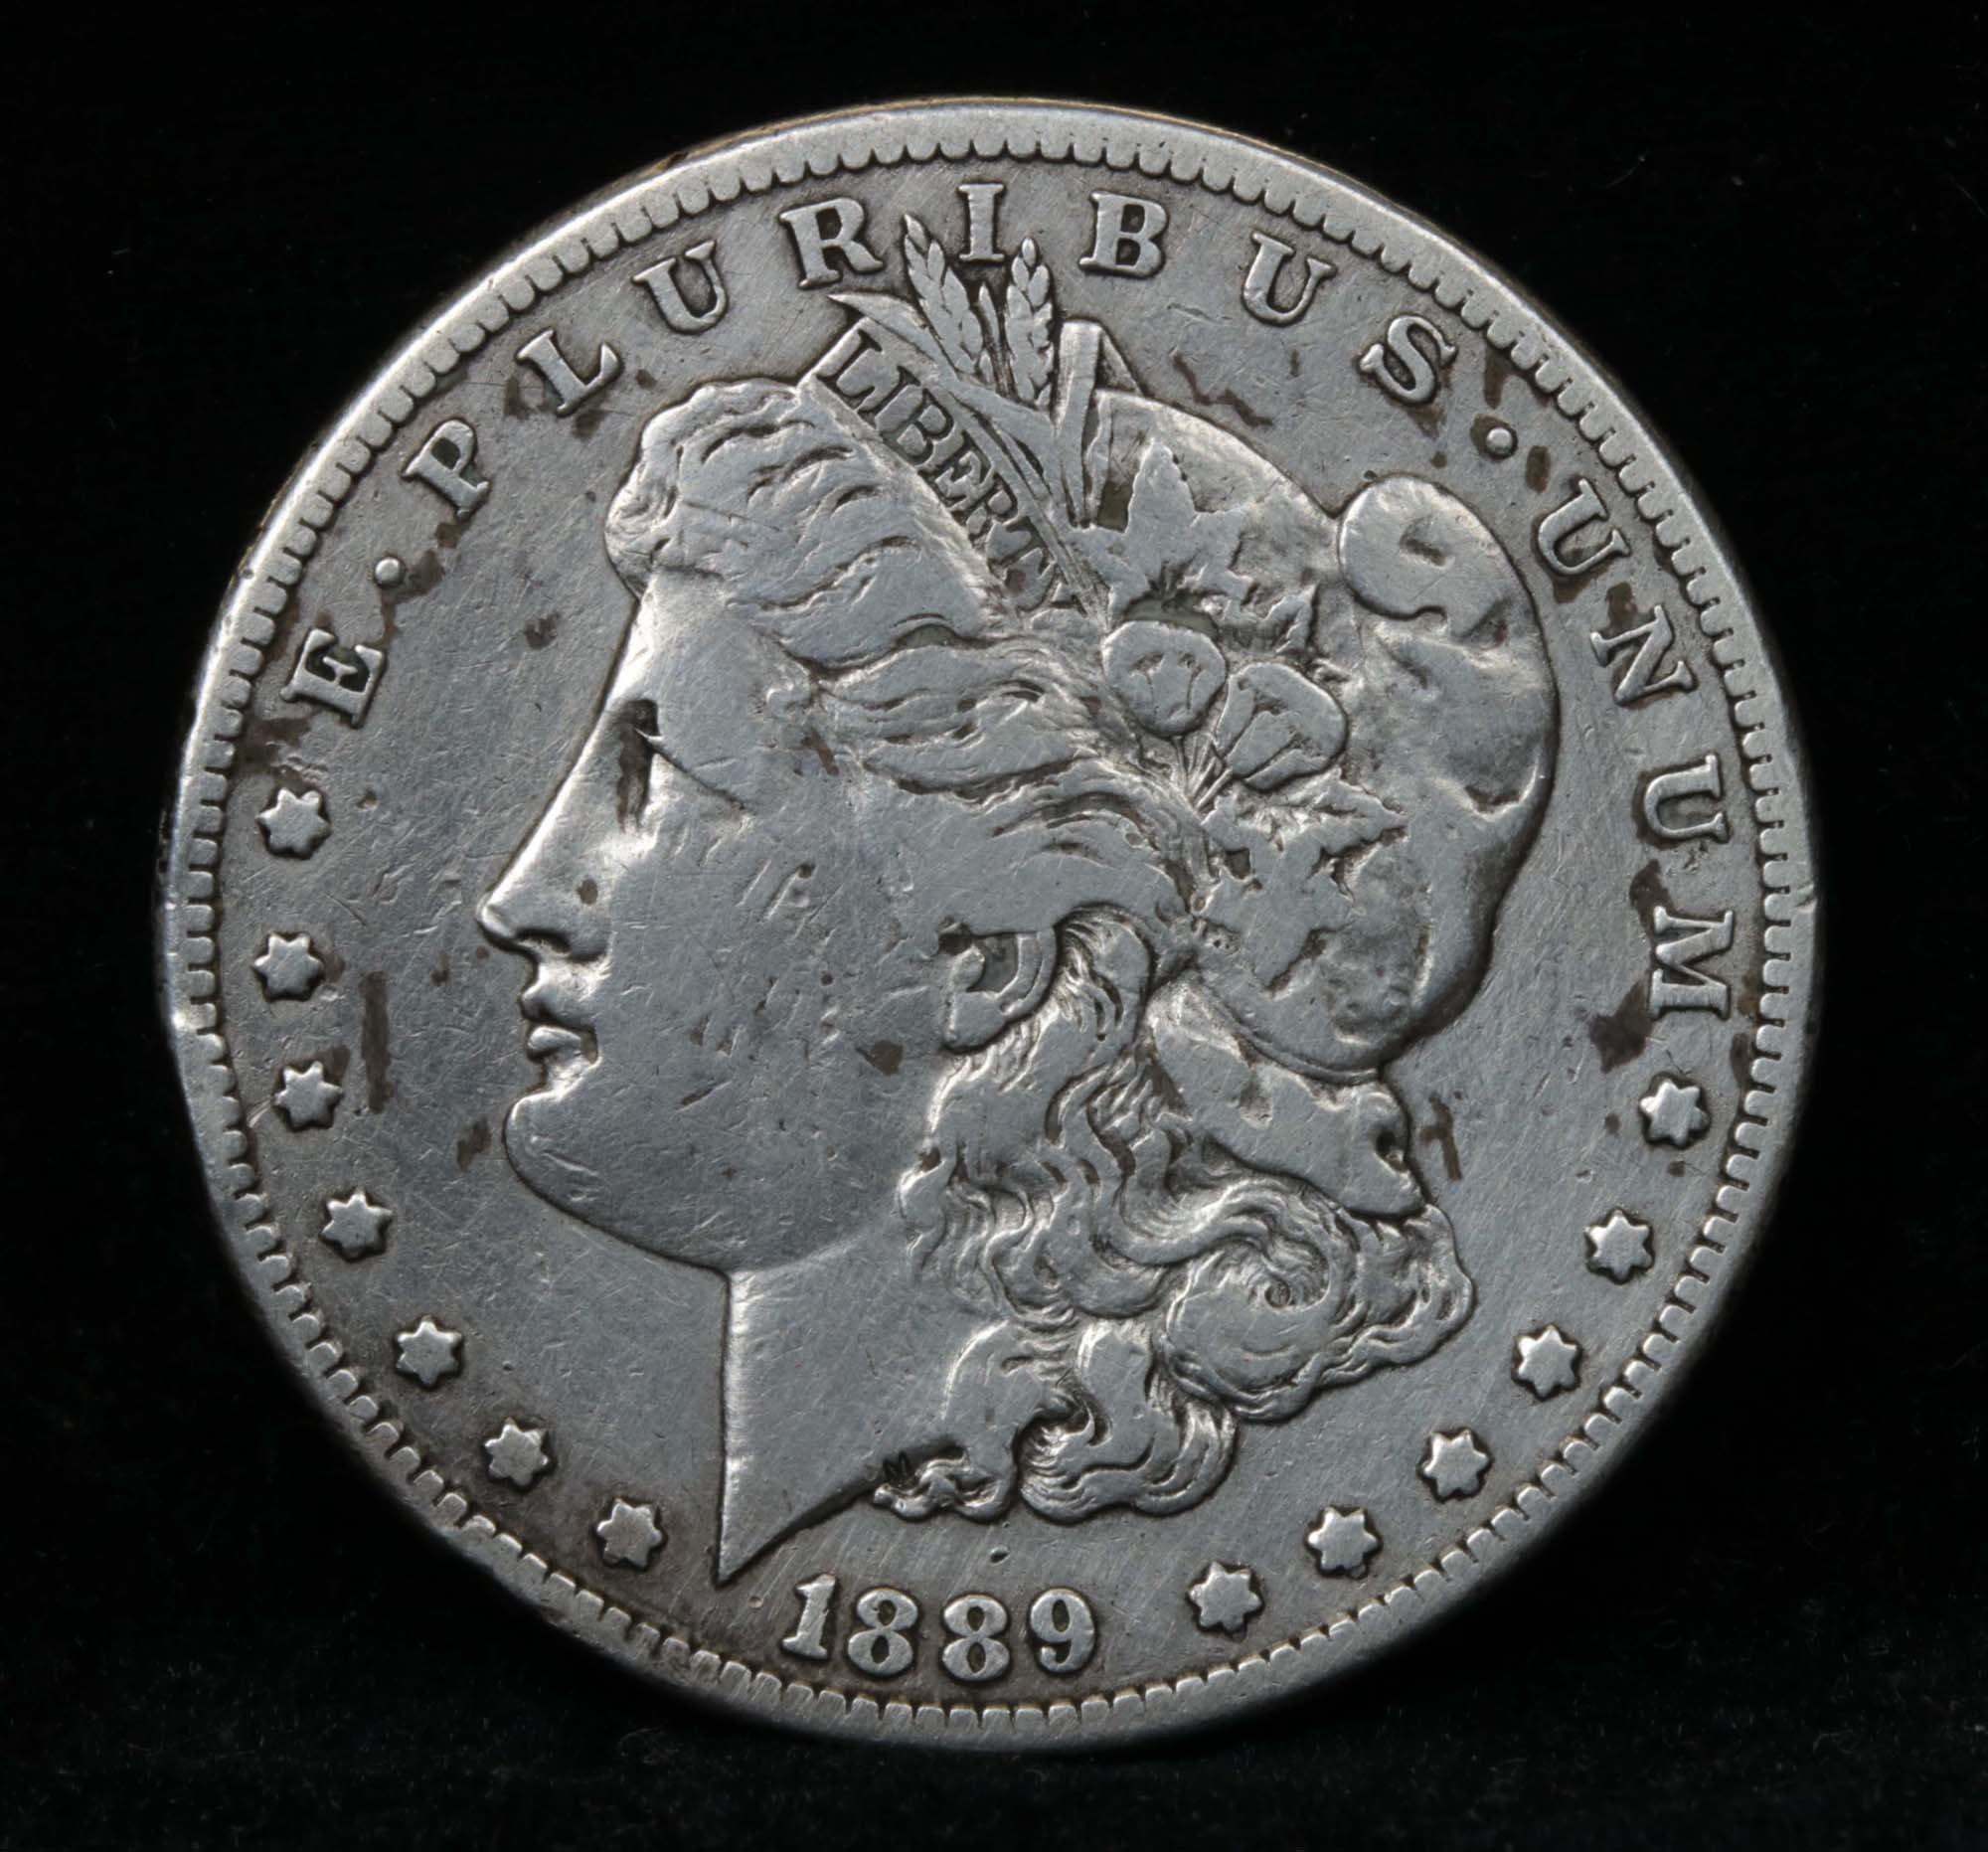 ***Auction Highlight*** 1889-cc Morgan Dollar $1 Graded vf++ by USCG. King